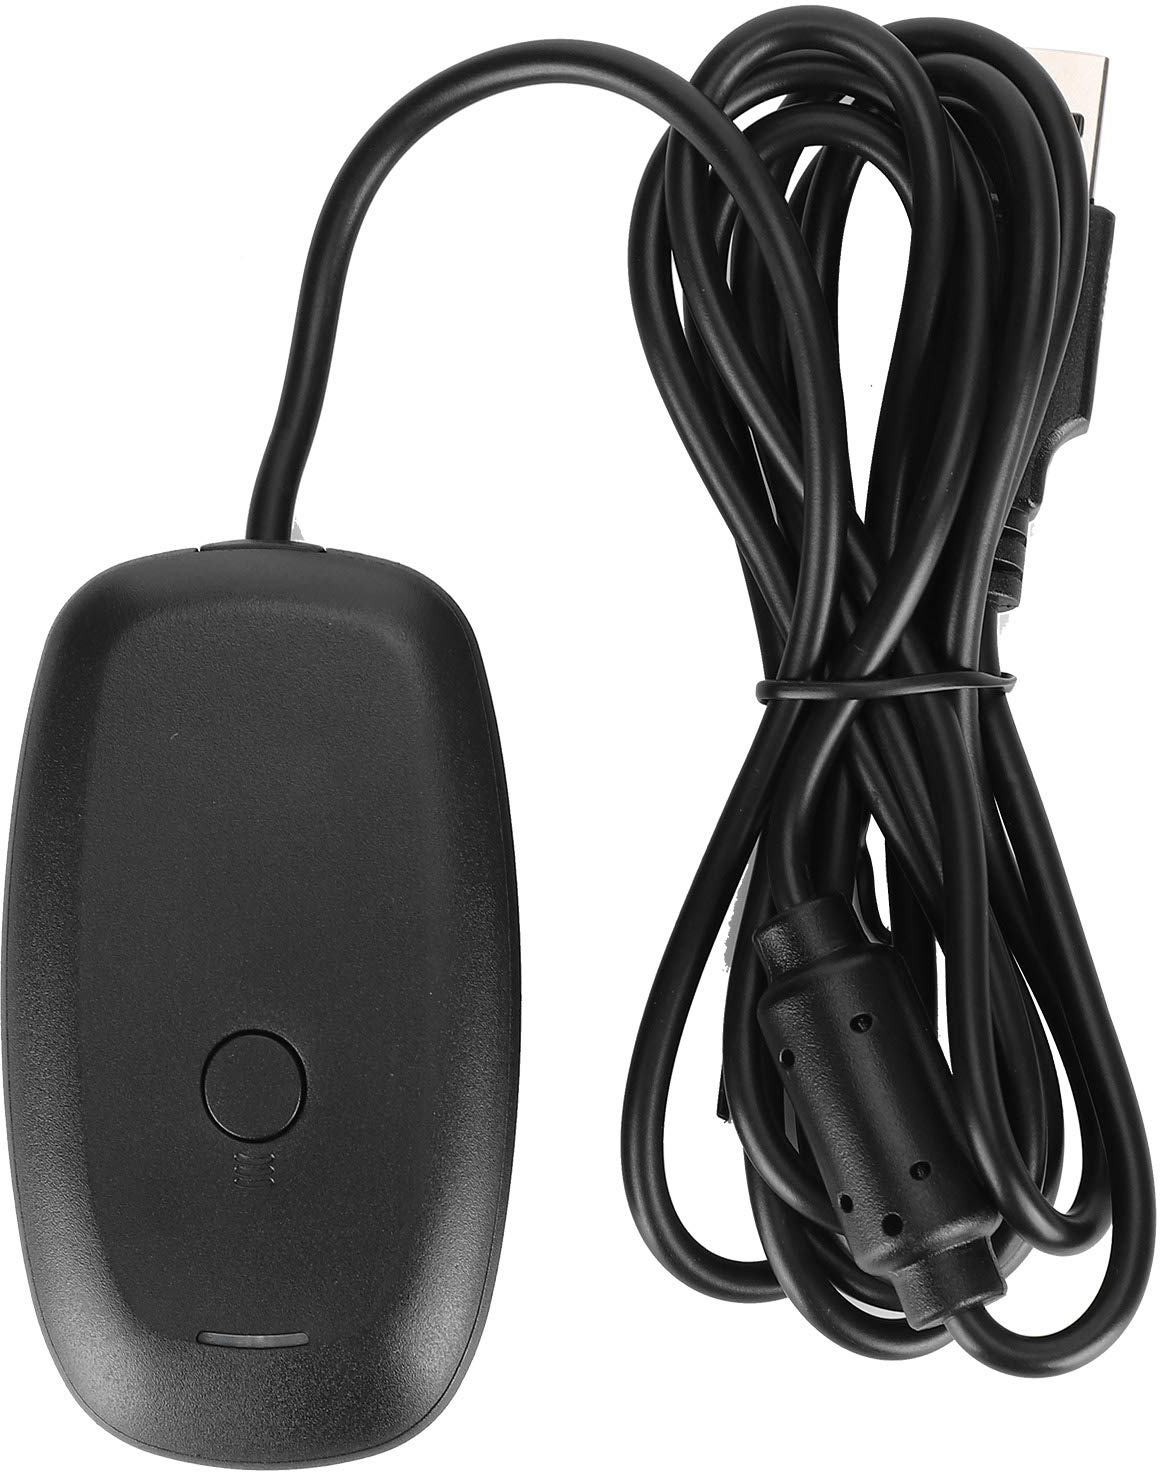 PC Receiver Gaming, Wireless Adapter Console für Microsoft M5 Audiocast HiFi Controller Xbox 360